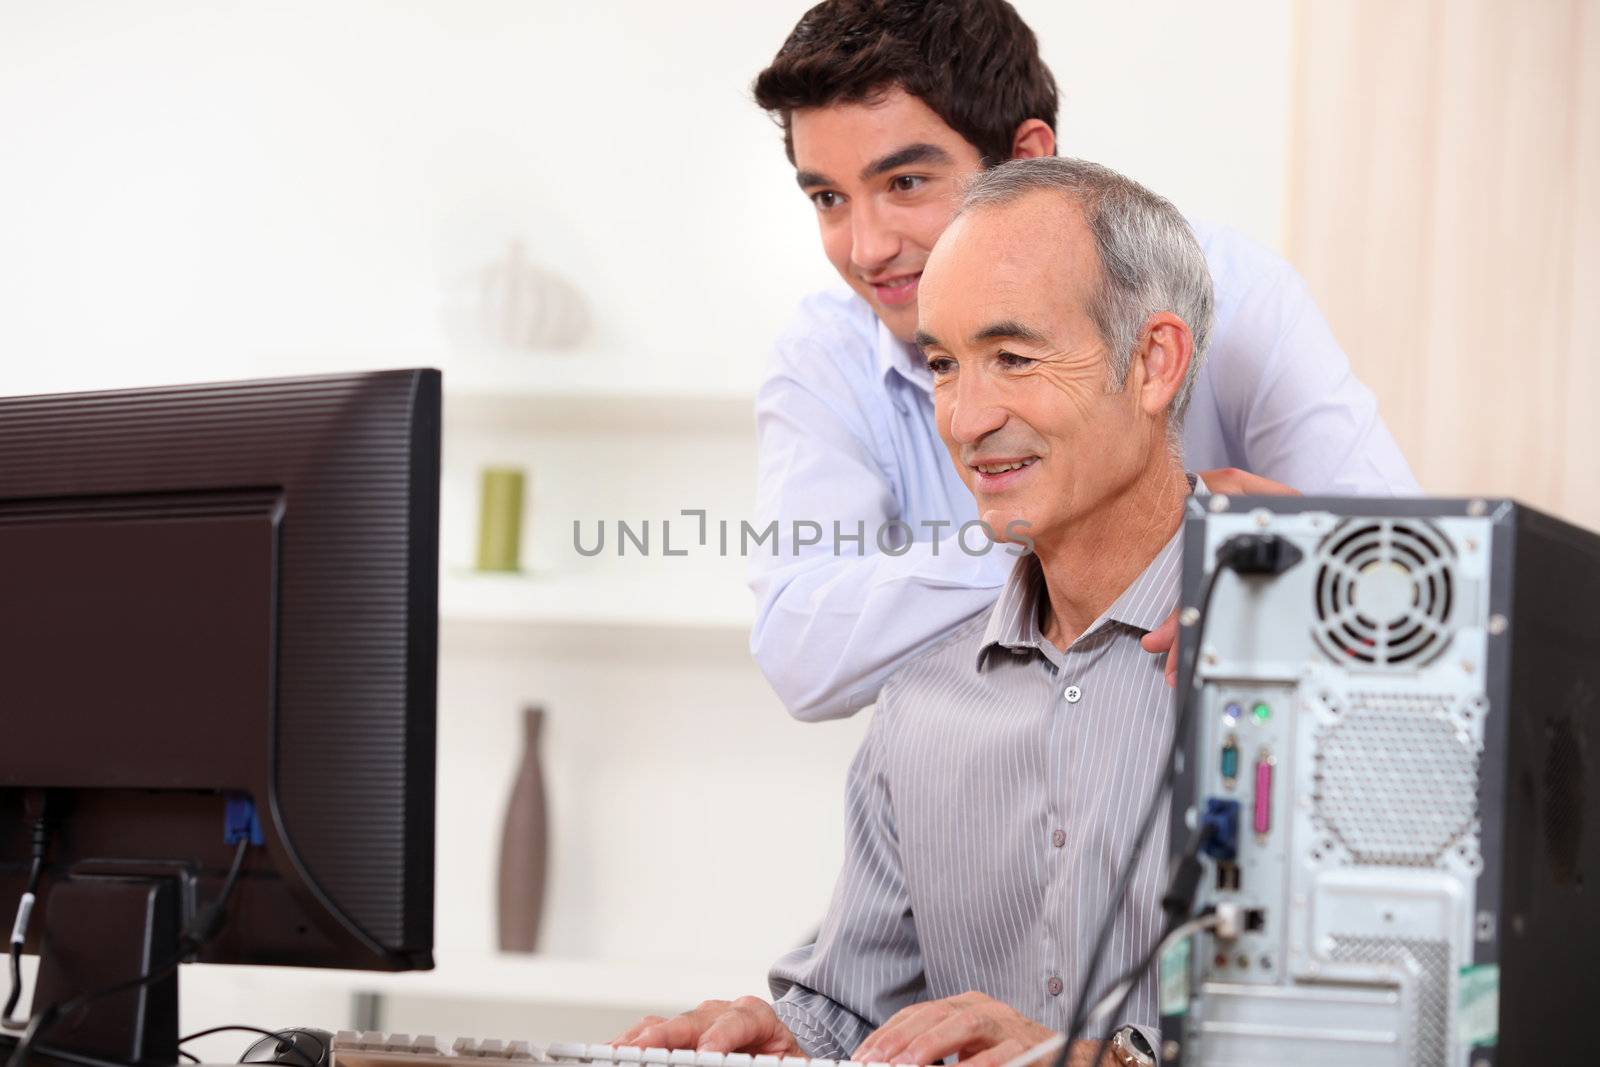 Young man teaching an elderly man computer skills